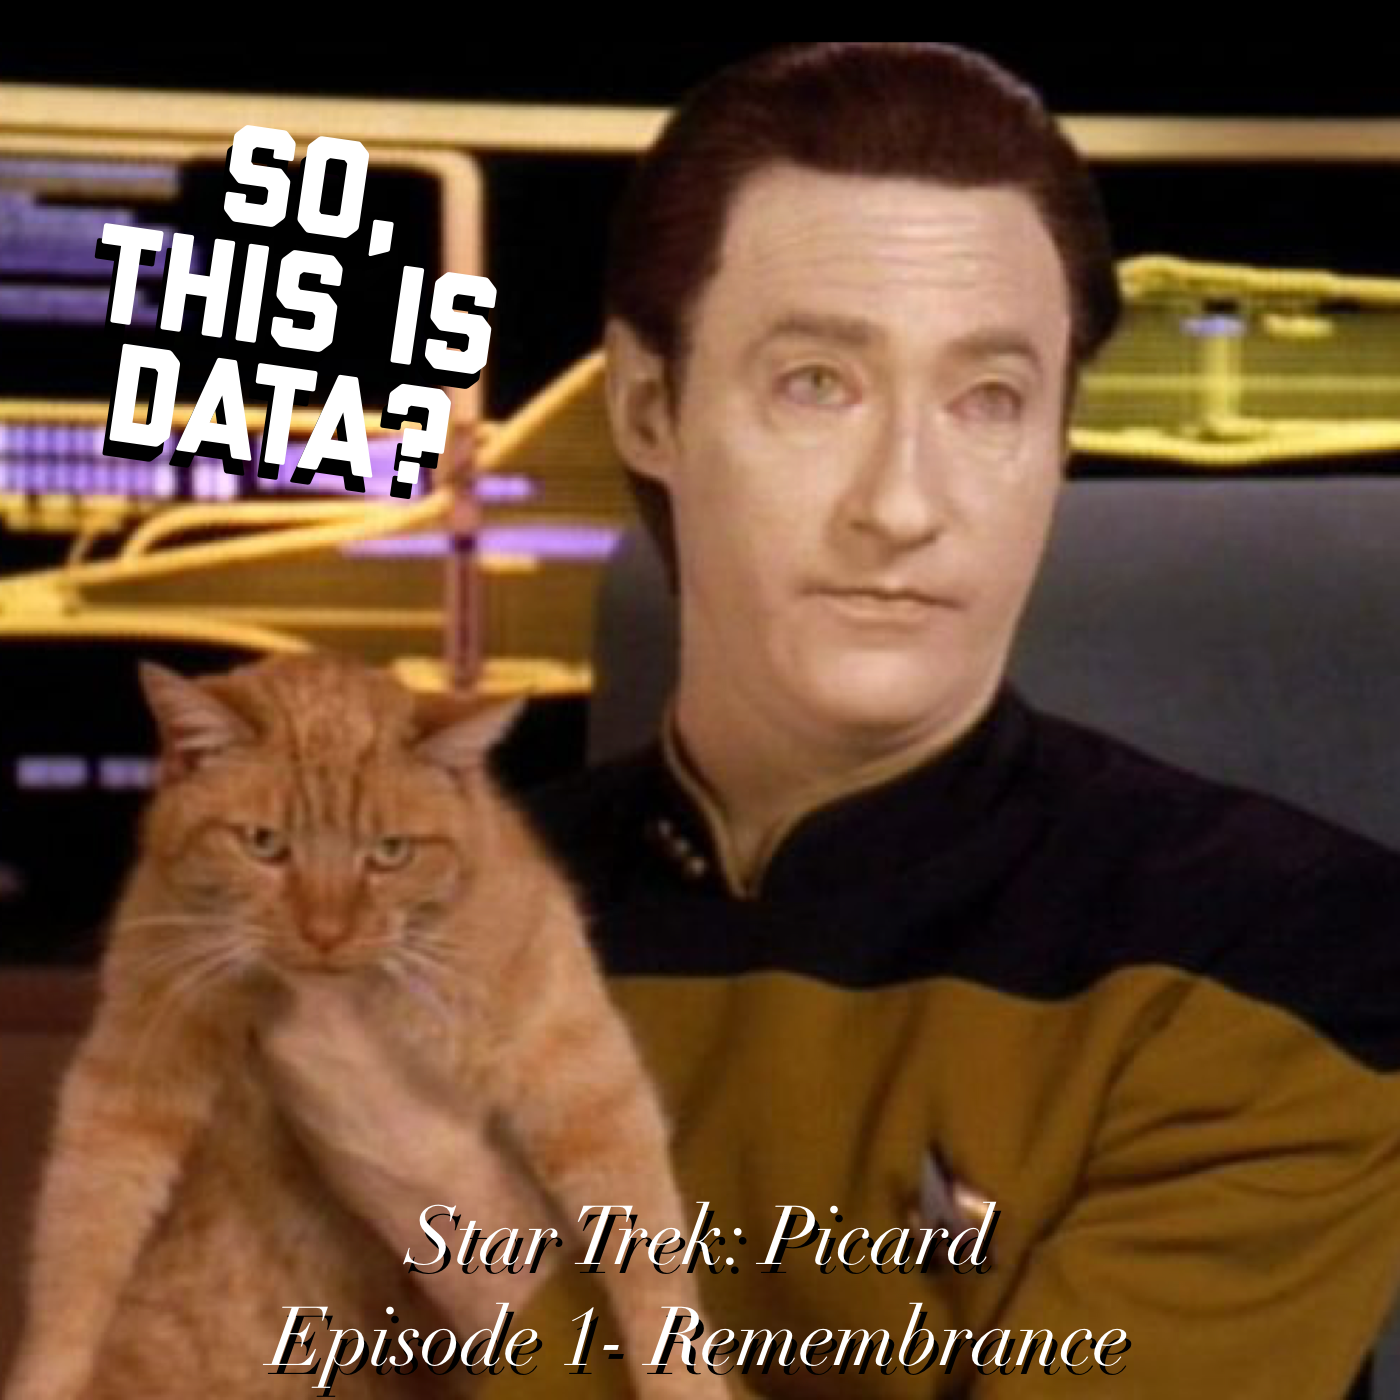 Star Trek: Picard Episode 1 - Remembrance